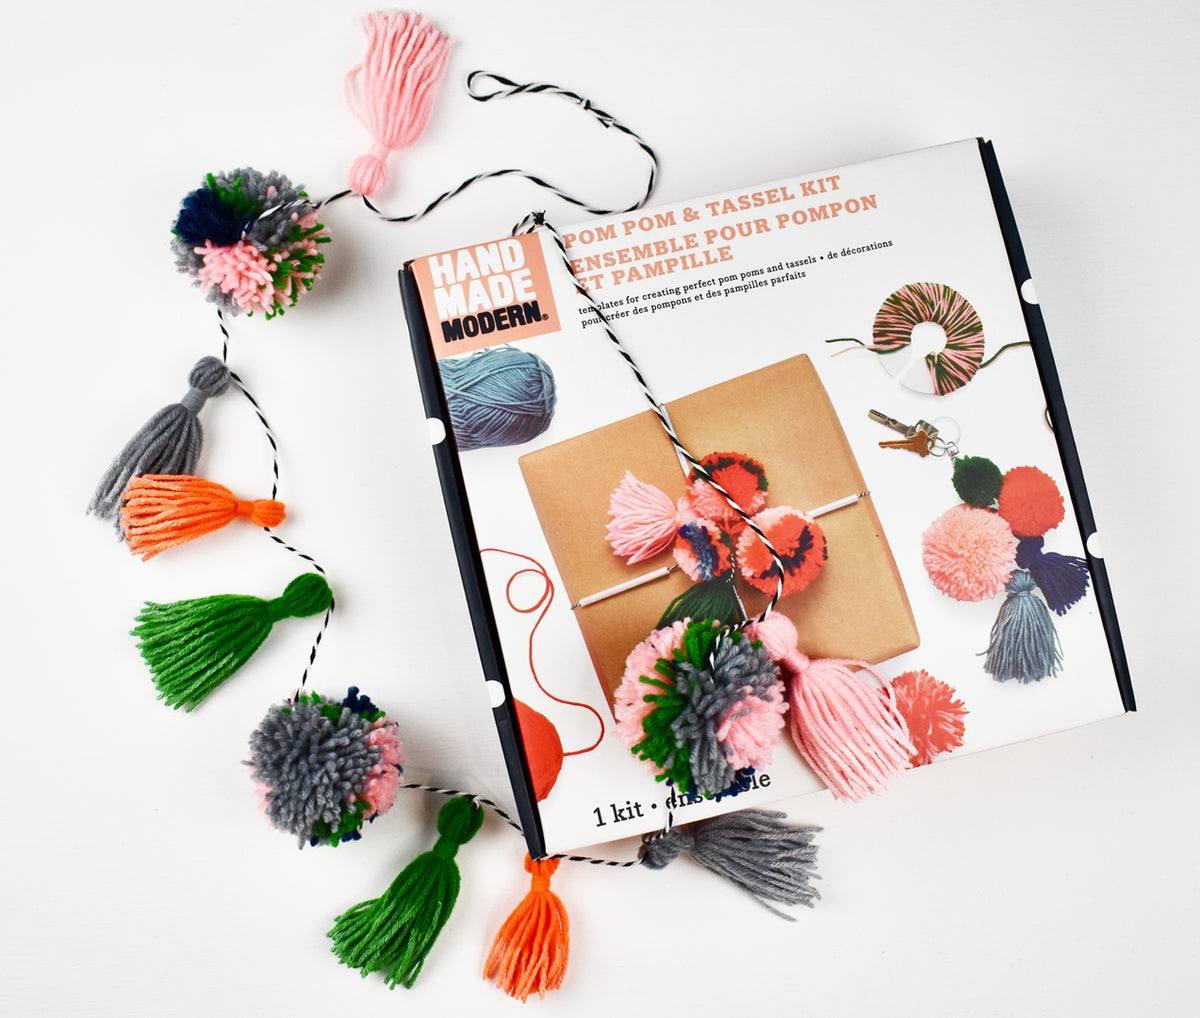 Rainbow Pom Pom Art Kits (Pack of 5) Craft Kits